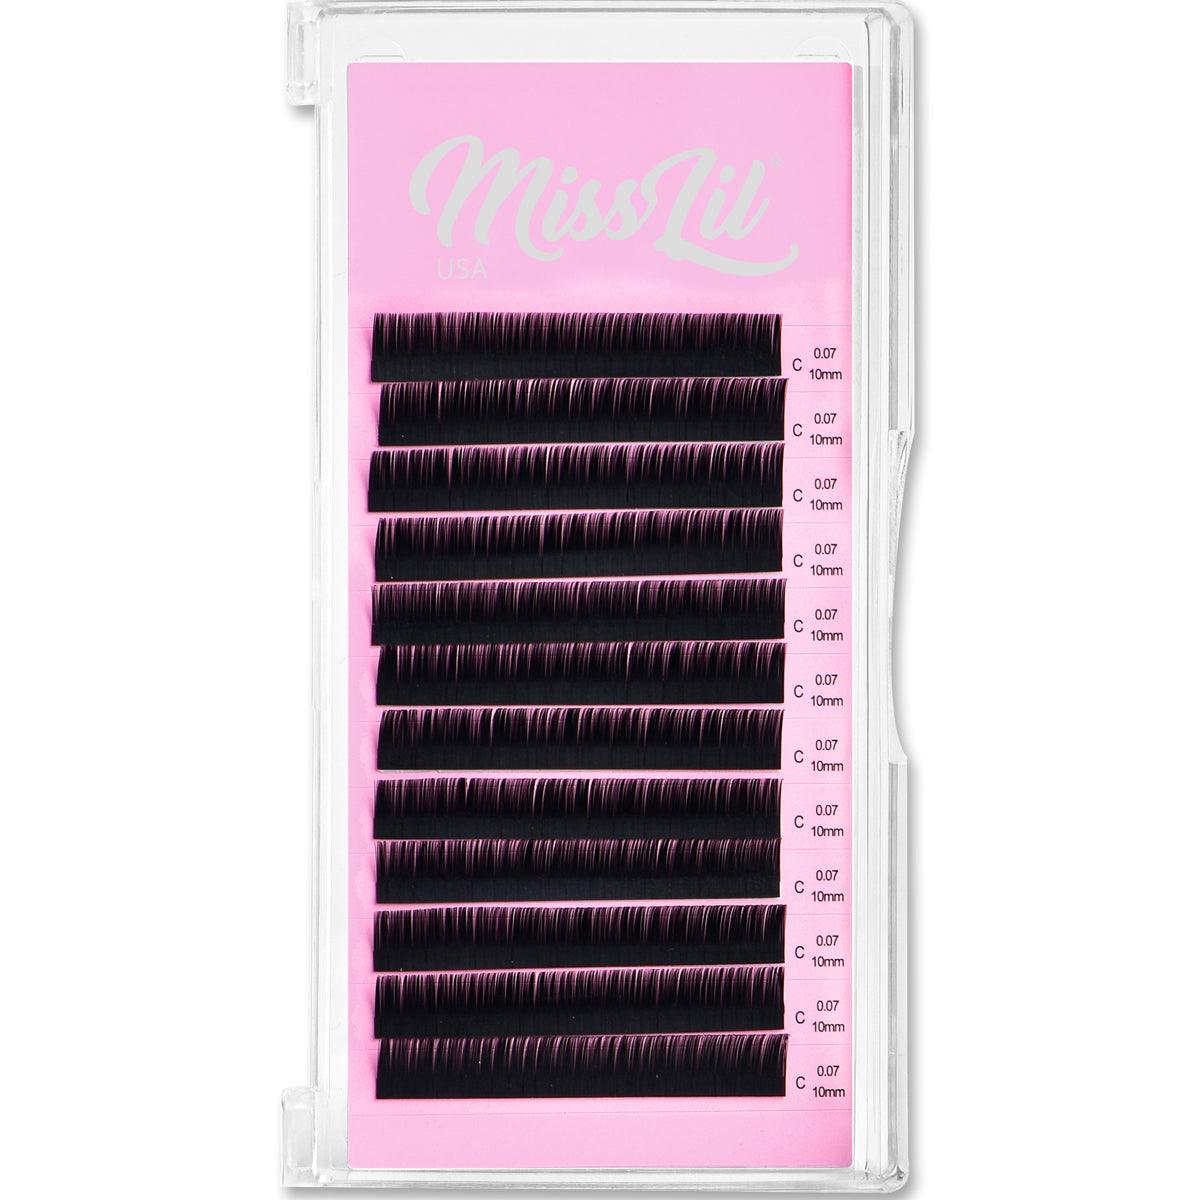 0.07 10mm C Curl Eyelash Extensions - Miss Lil USA